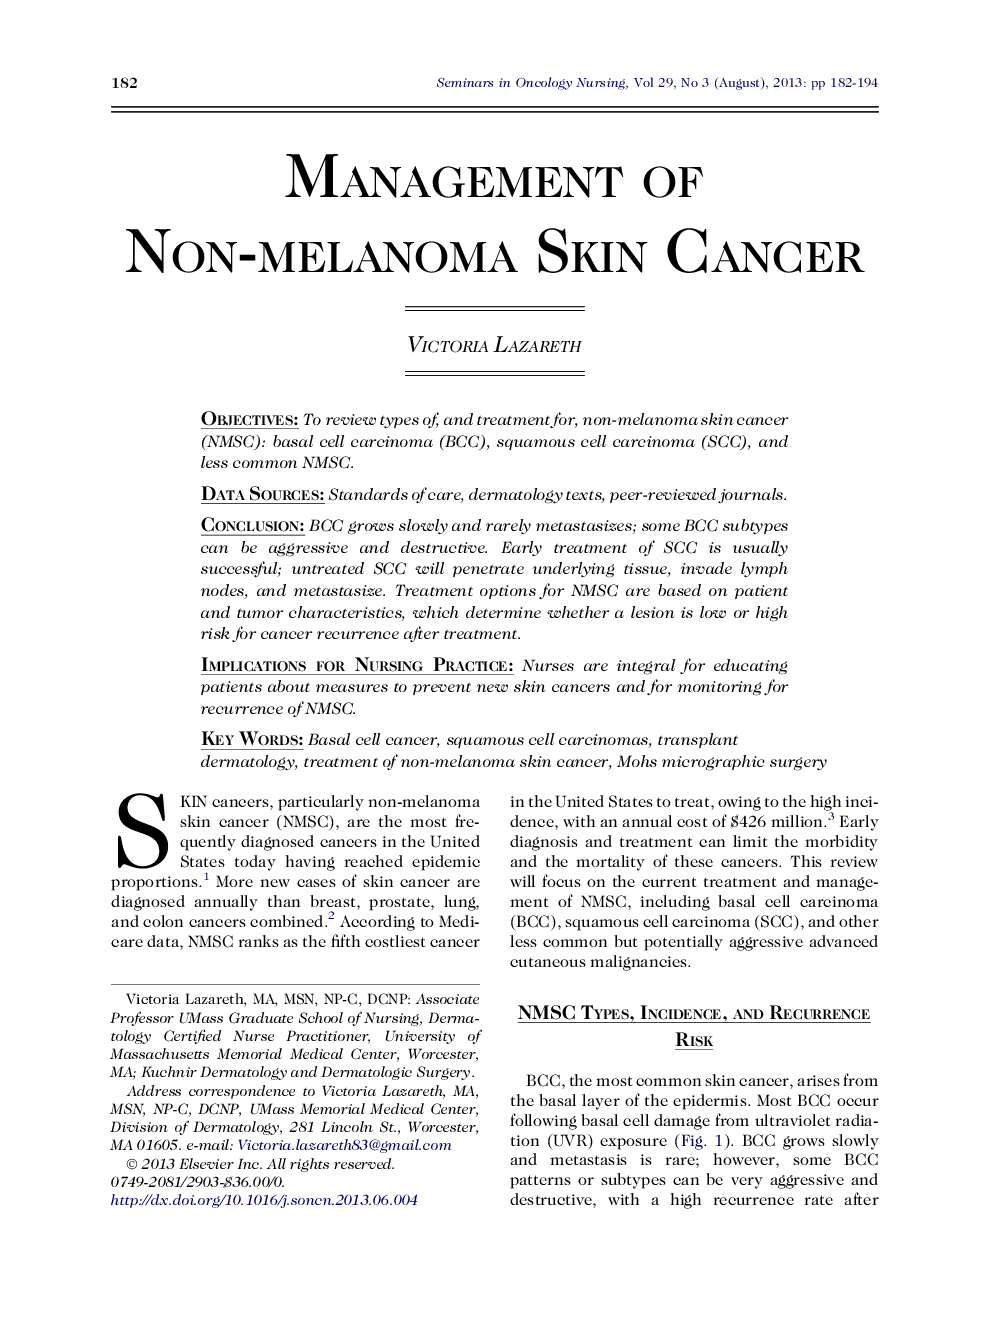 Management of Non-melanoma Skin Cancer